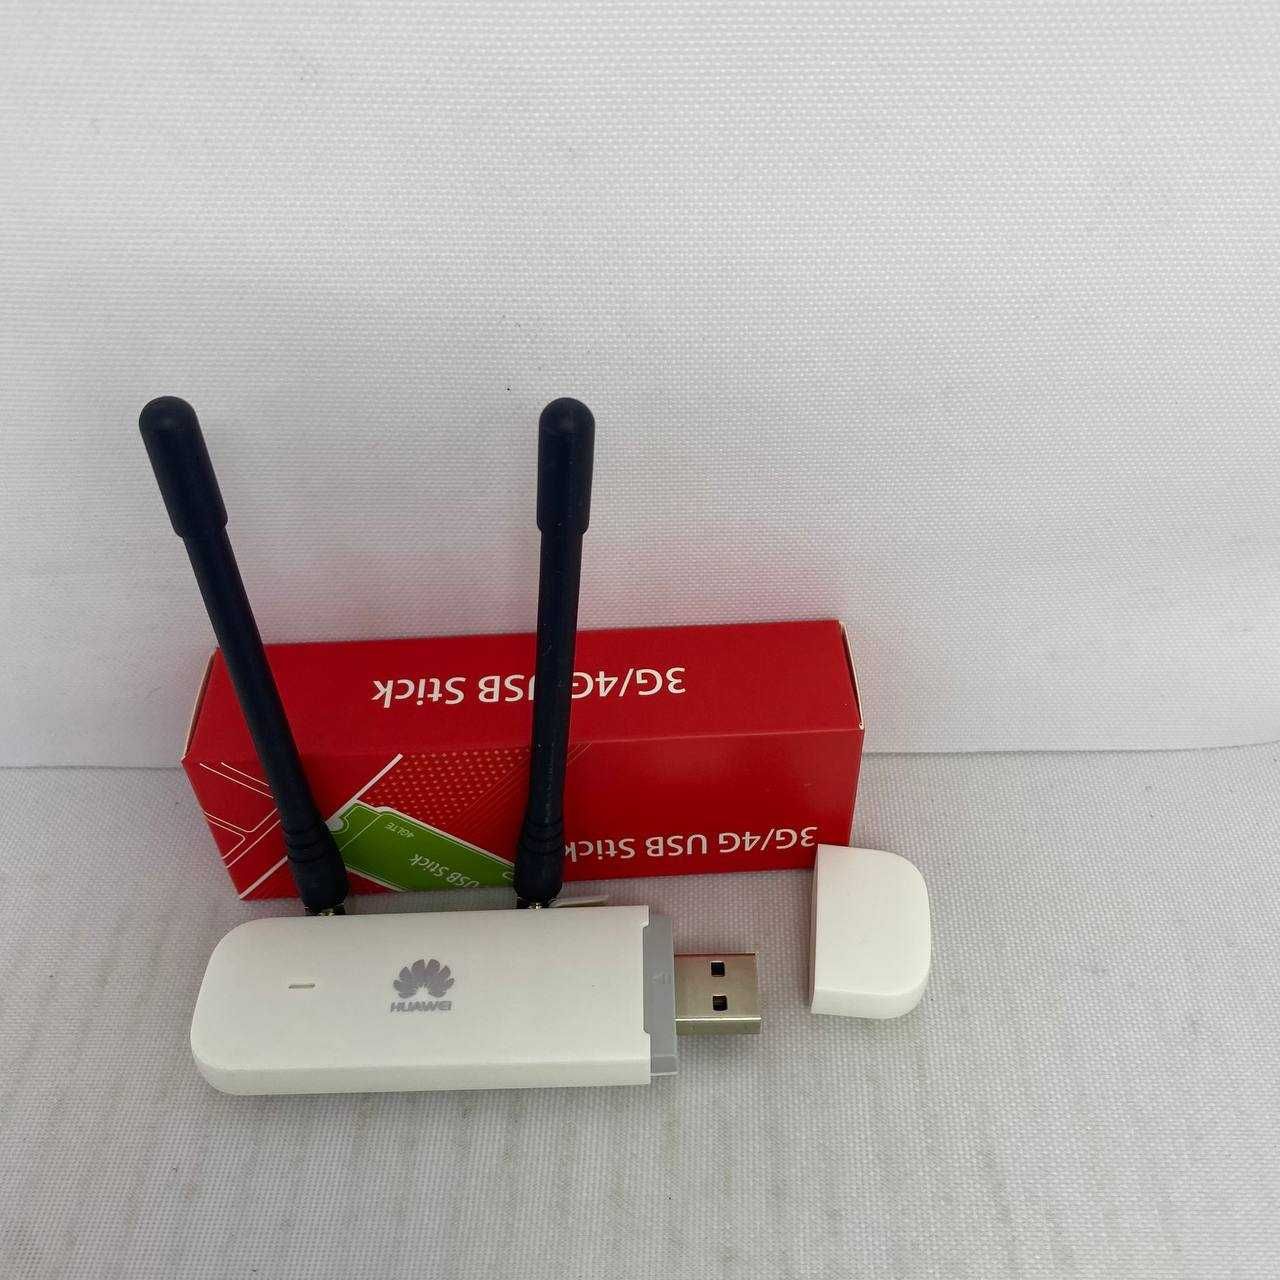 USB модем Huawei E3372 -602+2 антенны 3g/4g